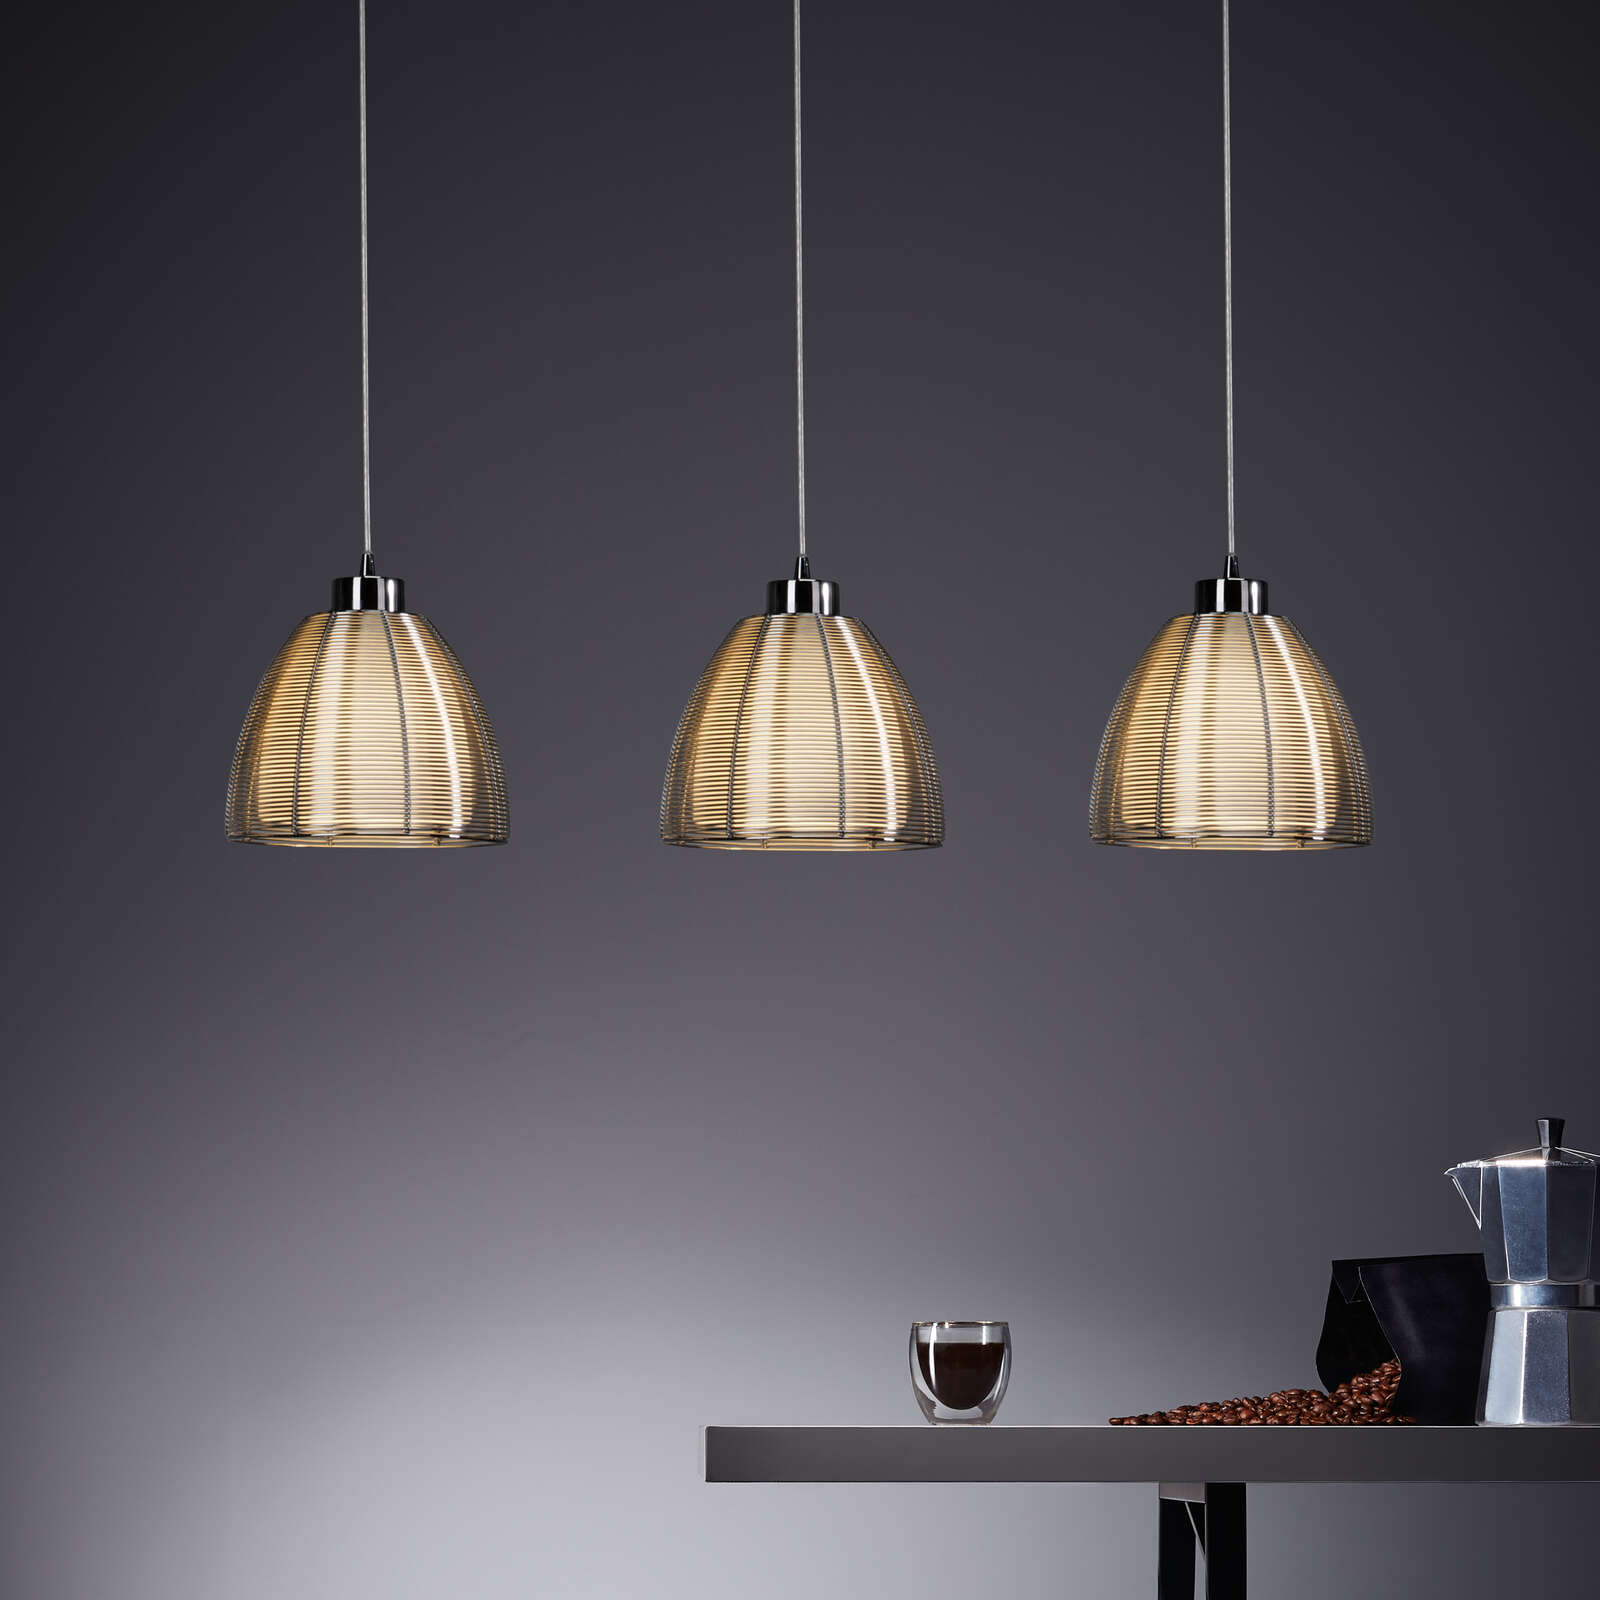             Glazen hanglamp - Maxime 7 - Metallic
        